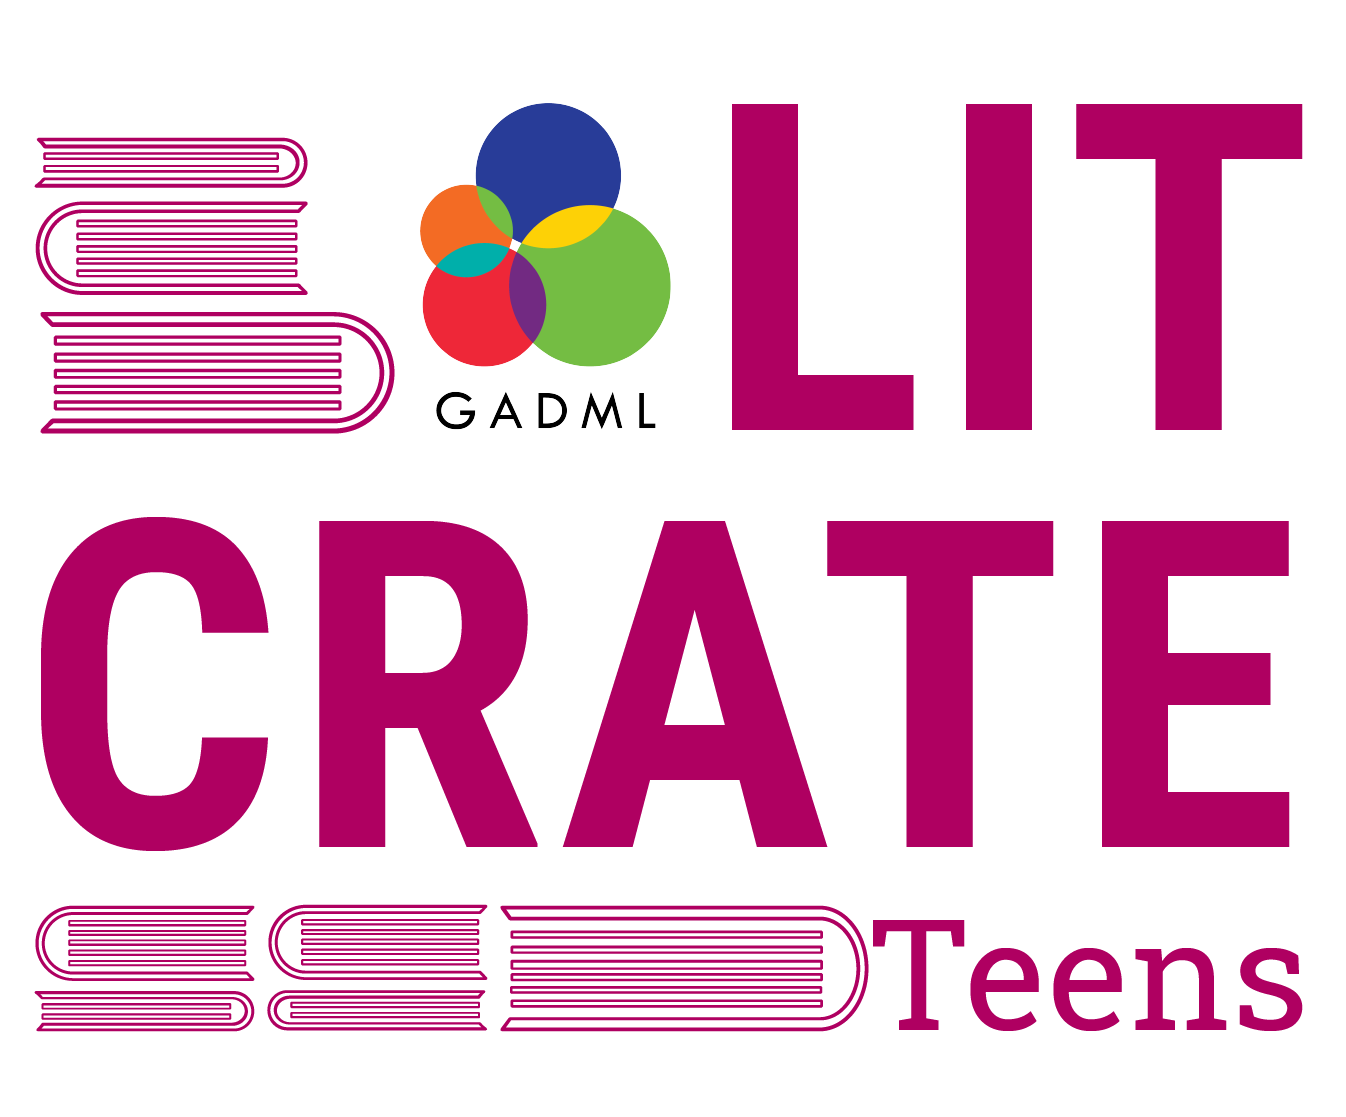 Teen Lit Crates logo in purple with GADML logo